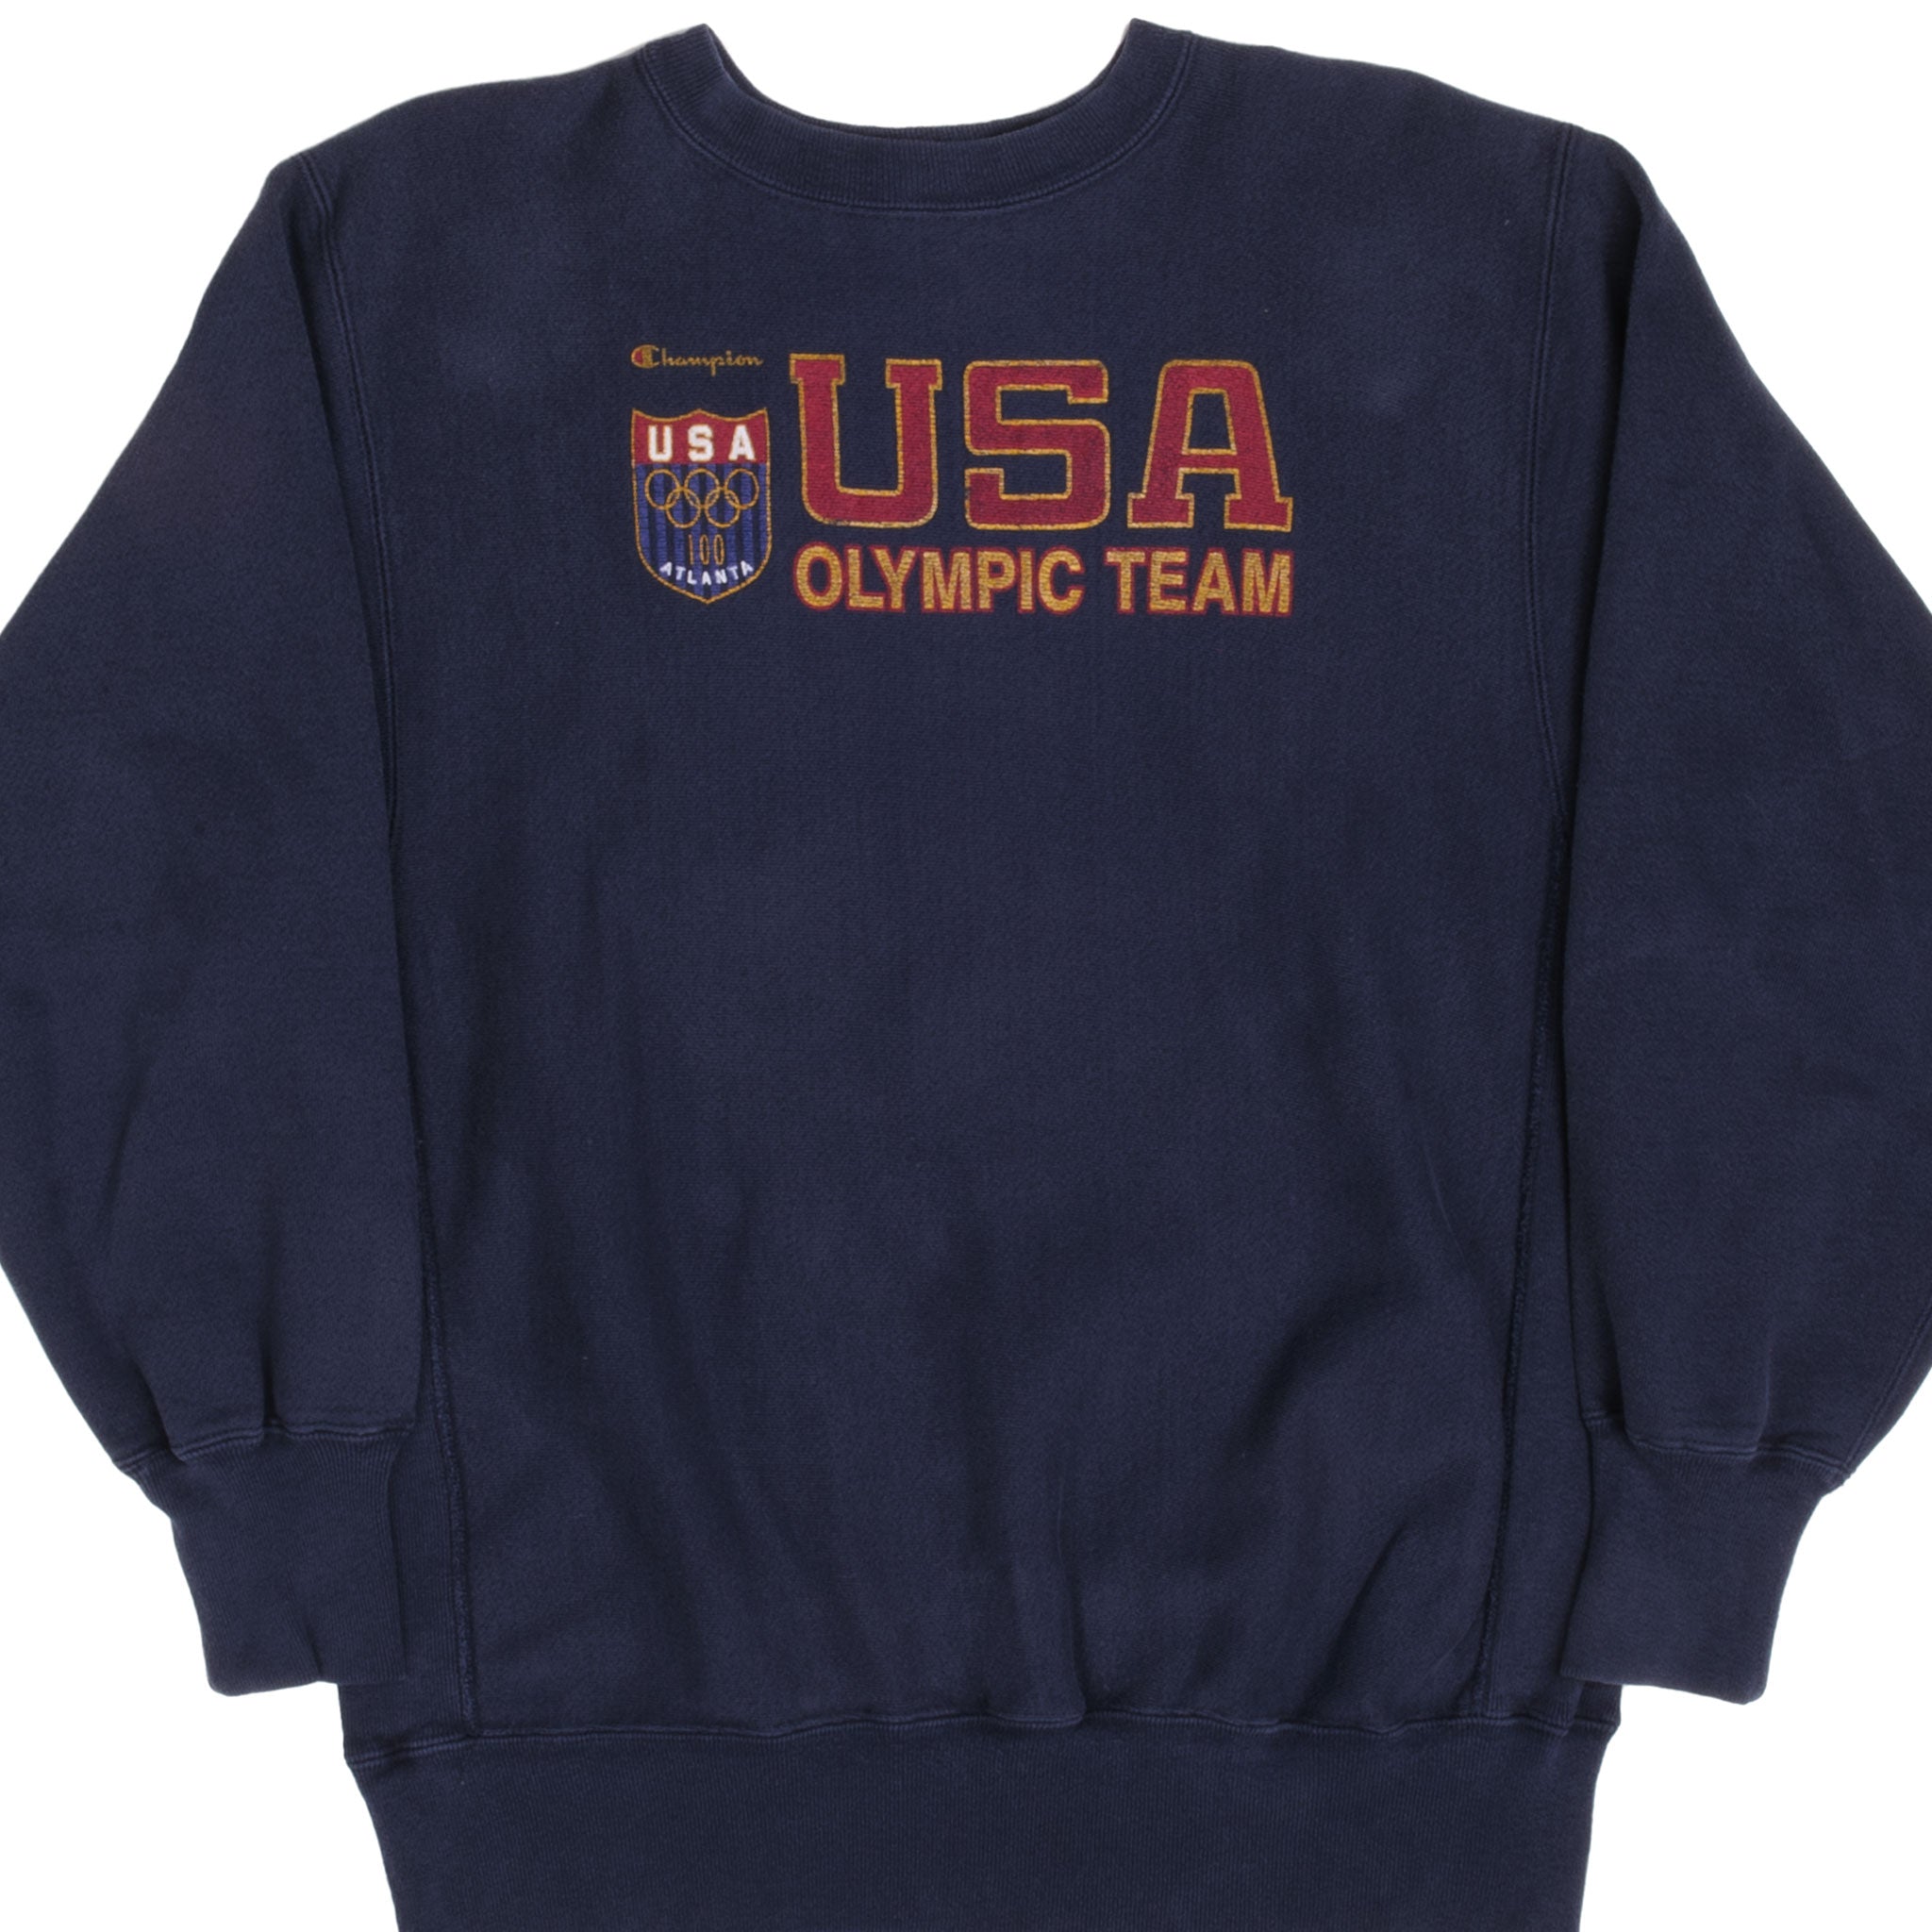 VINTAGE CHAMPION REVERSE WEAVE USA OLYMPIC TEAM SWEATSHIRT 1996 XL MADE USA